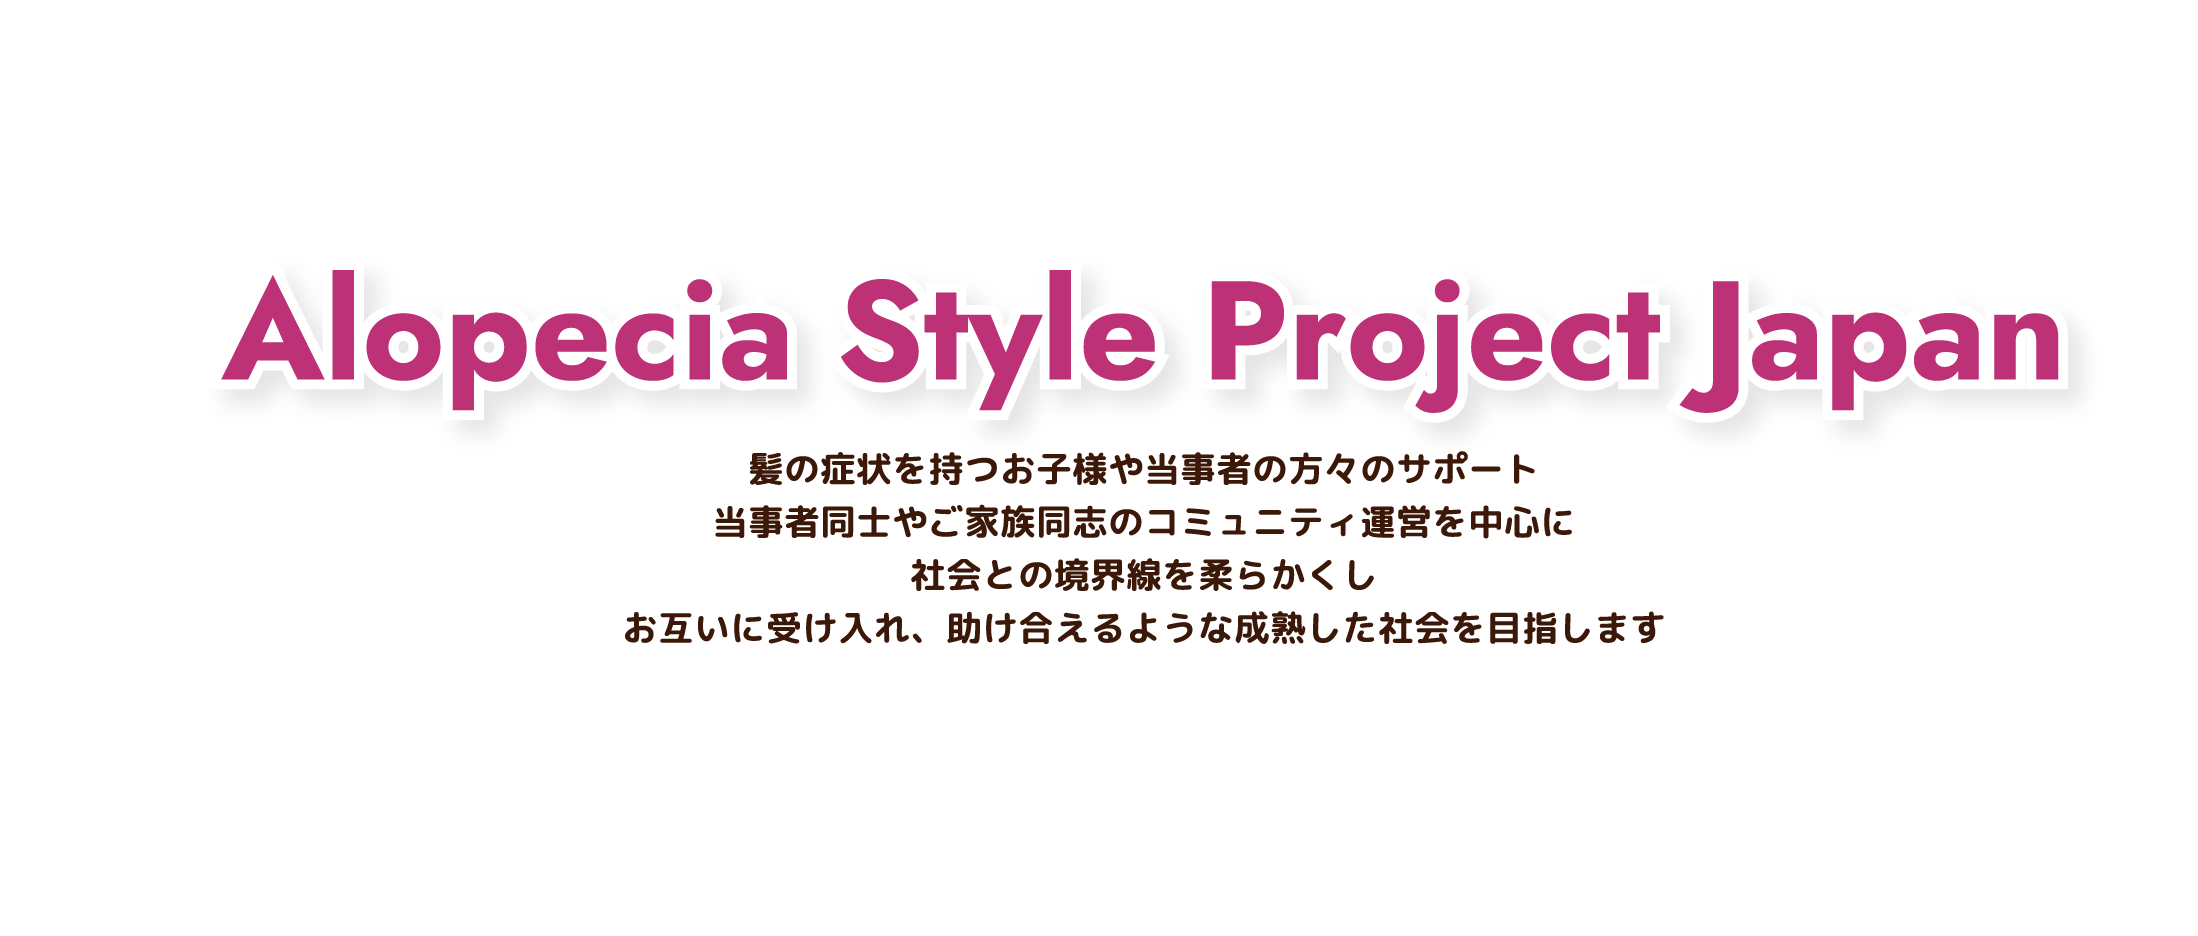 Alopecia Style Project Japan